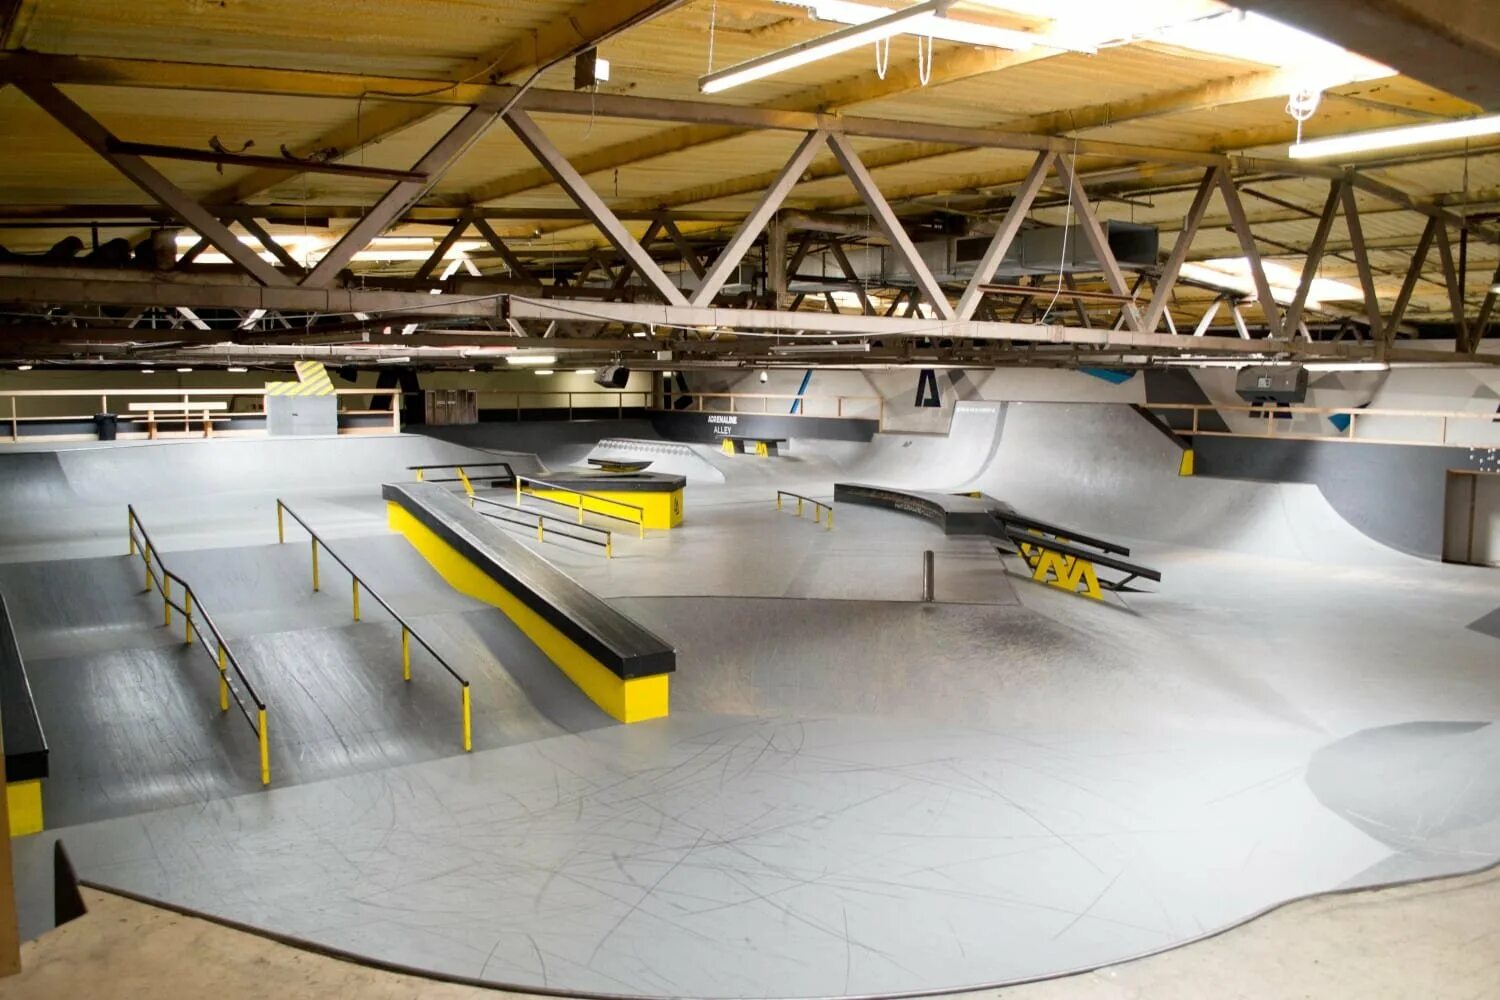 РАМСТРОЙ Хаус скейт парк. Red Deck скейт парк. Smp Skatepark скейт парк. Борисовские пруды скейтпарк.